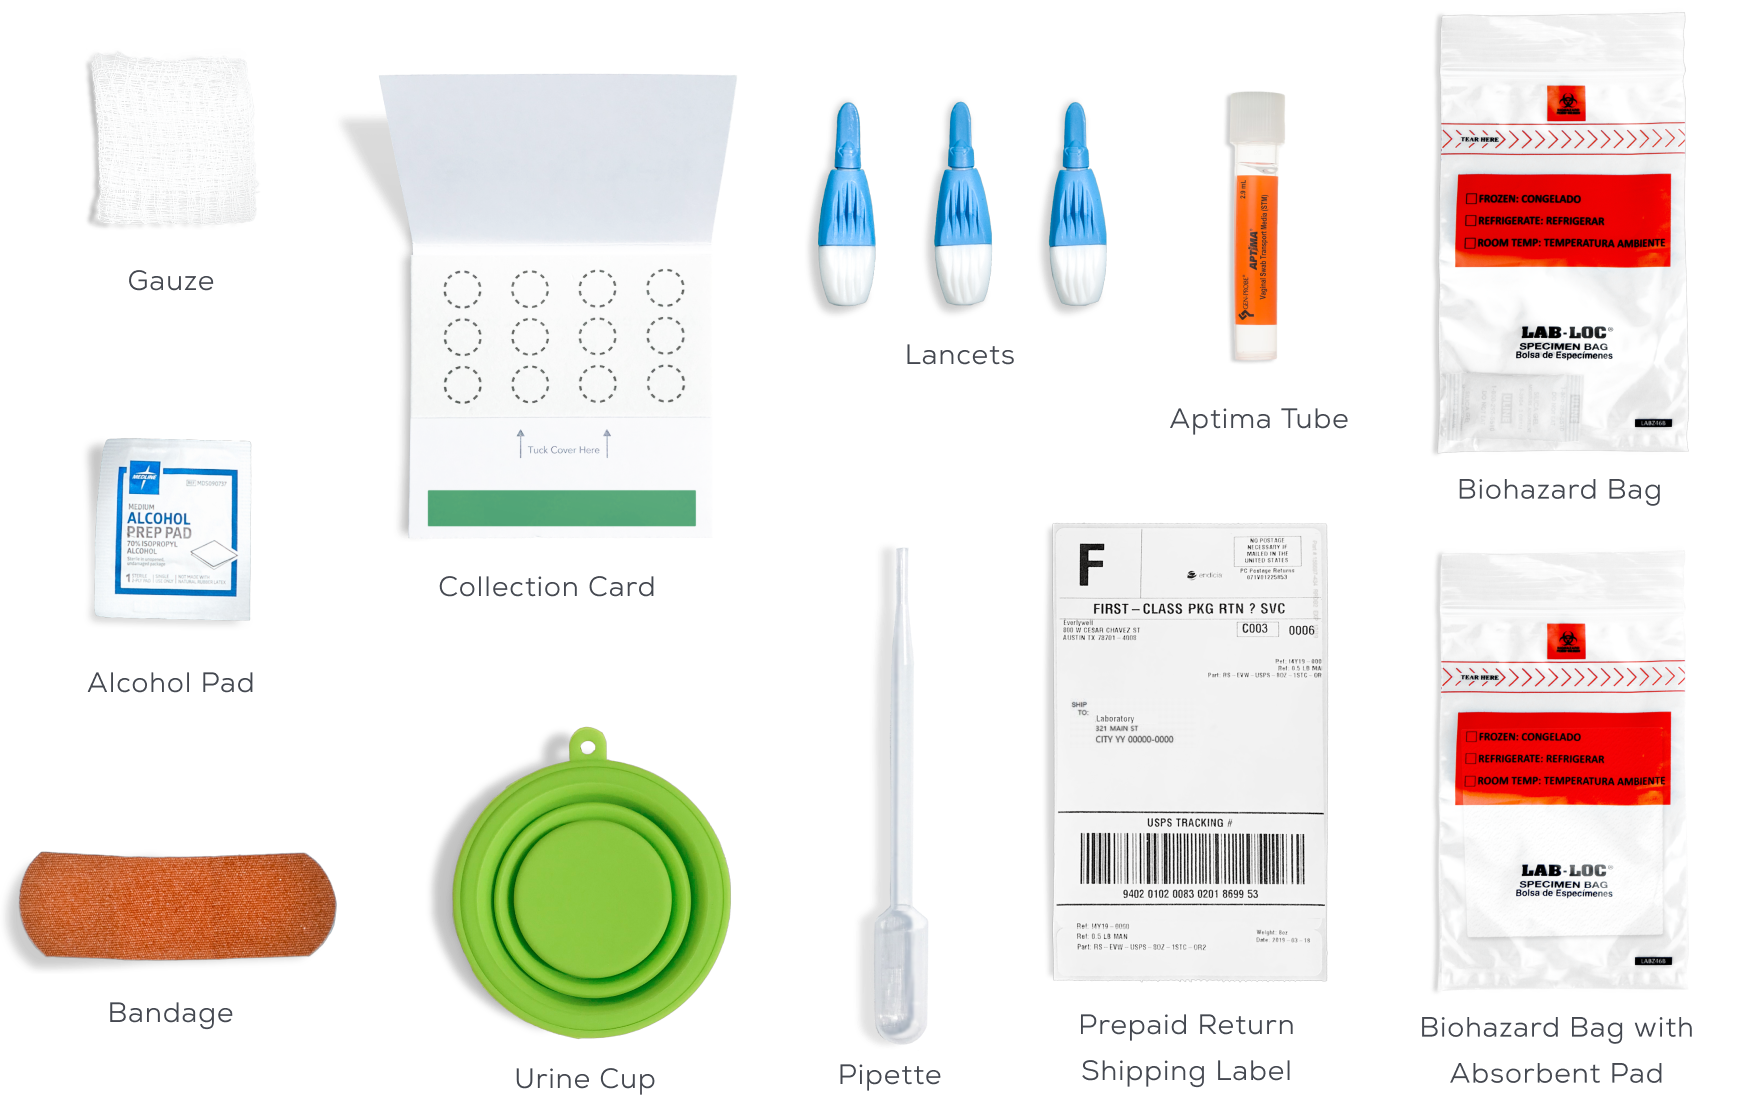 Home Health Testing: Drug Test Kits & Alcohol Test Kits